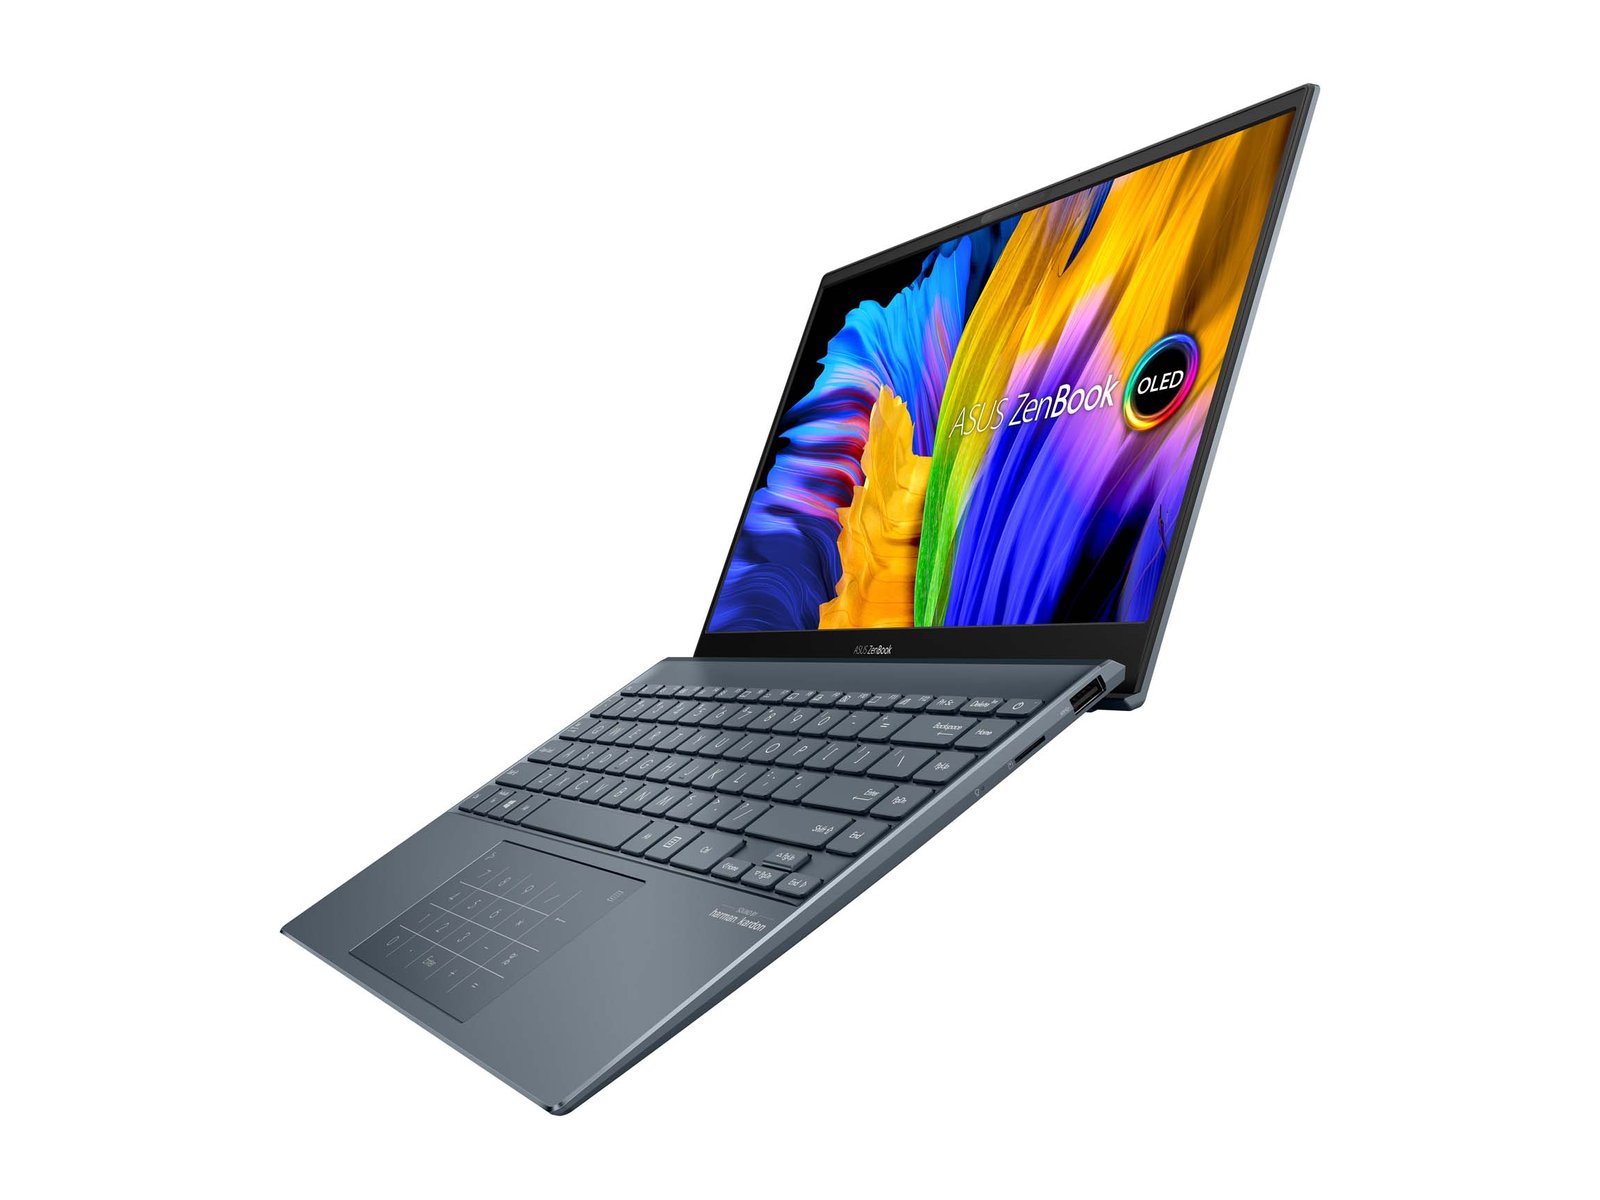 Asus Zenbook 13 Ultra Slim Laptop Ryzen 7 Price in Nepal - Aliteq